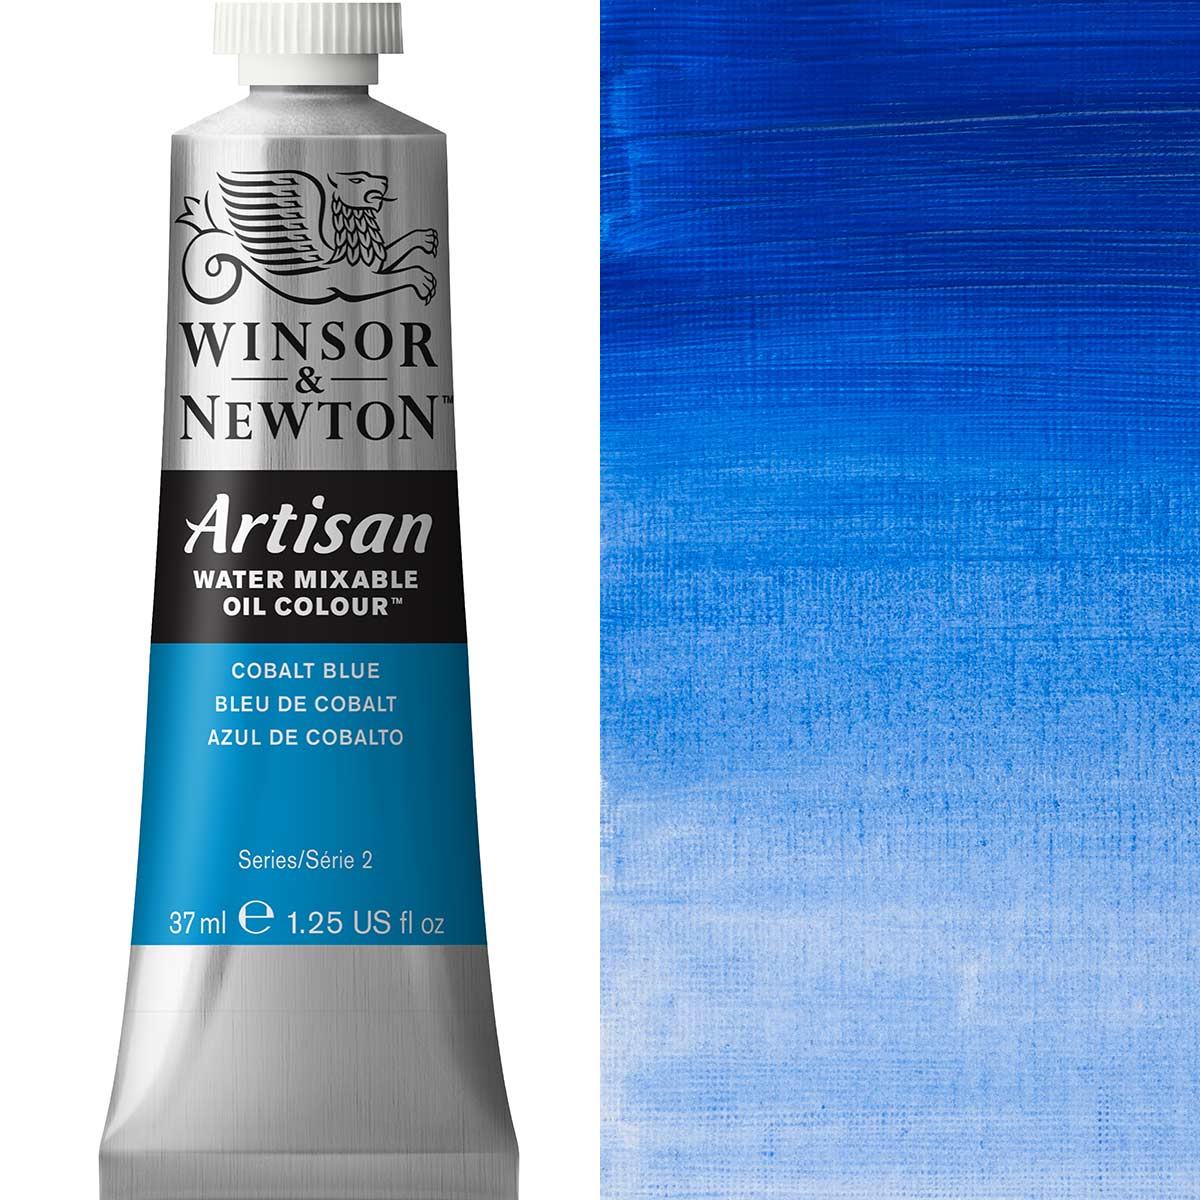 Winsor and Newton - Artisan Oil Colour Watermixable - 37ml - Cobalt Blue